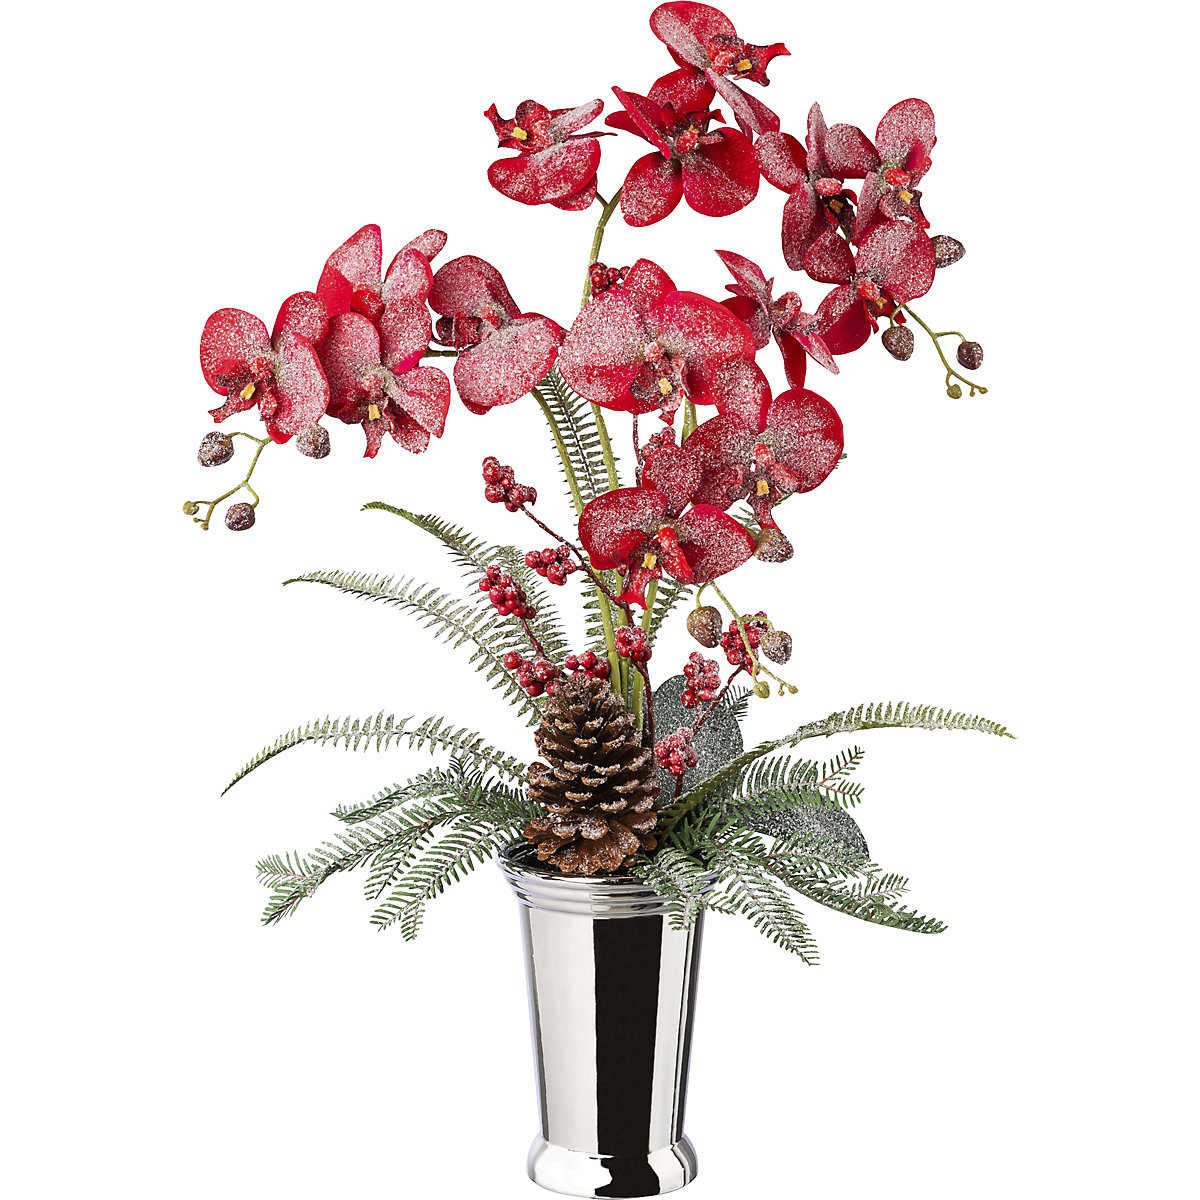 Arranjo de orquídeas em vaso cerâmico